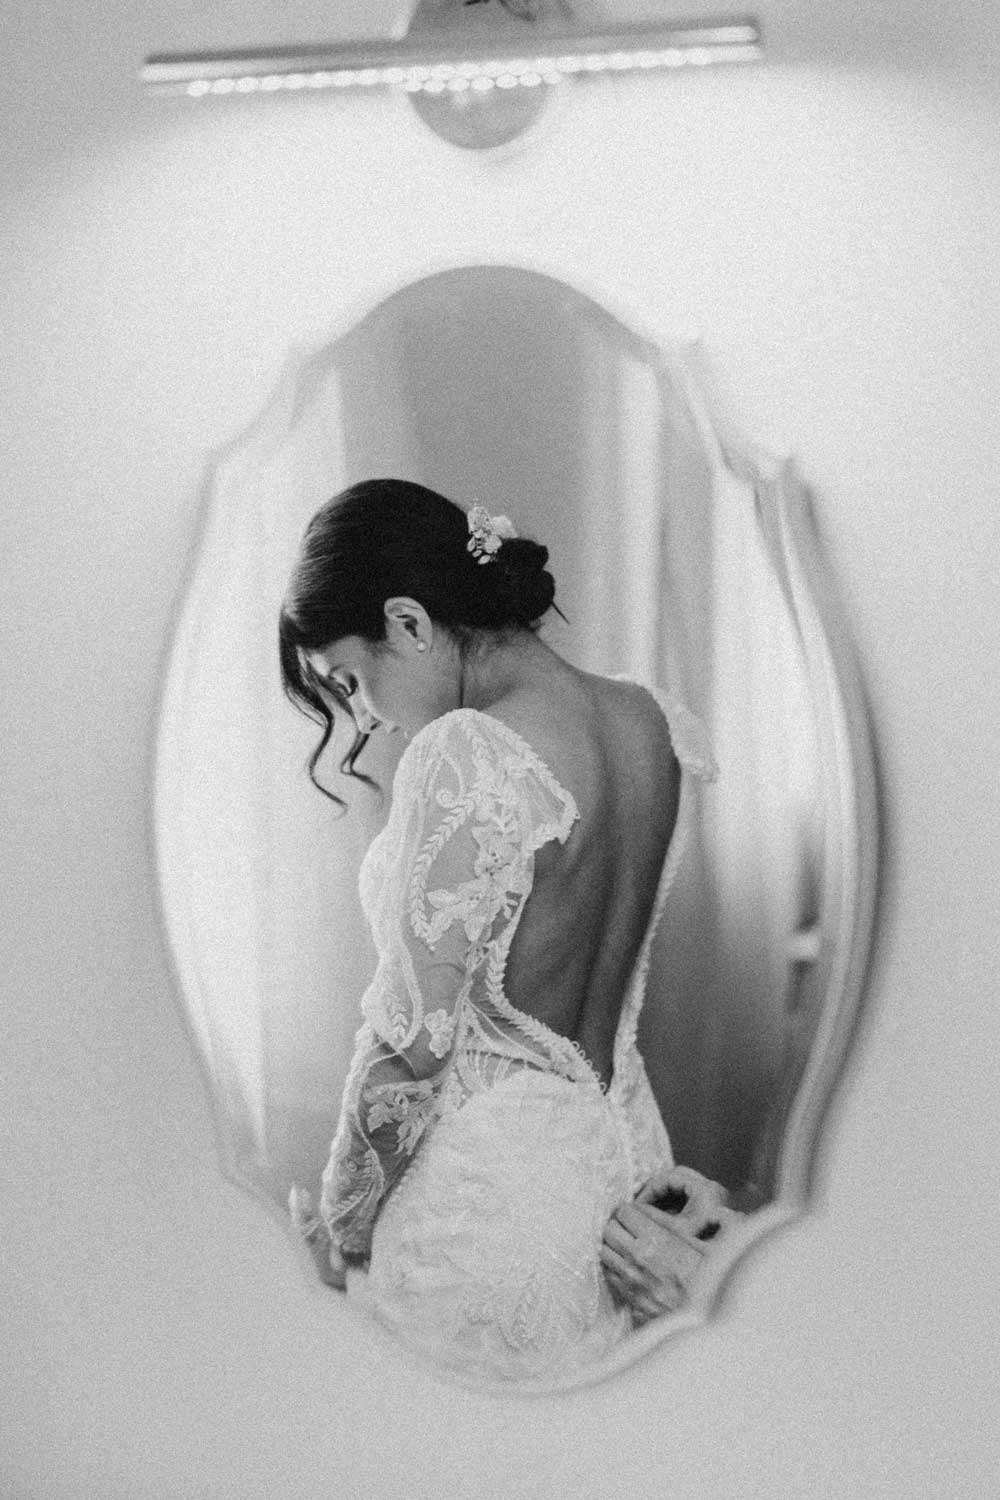 A bride in a wedding dress in a mirror